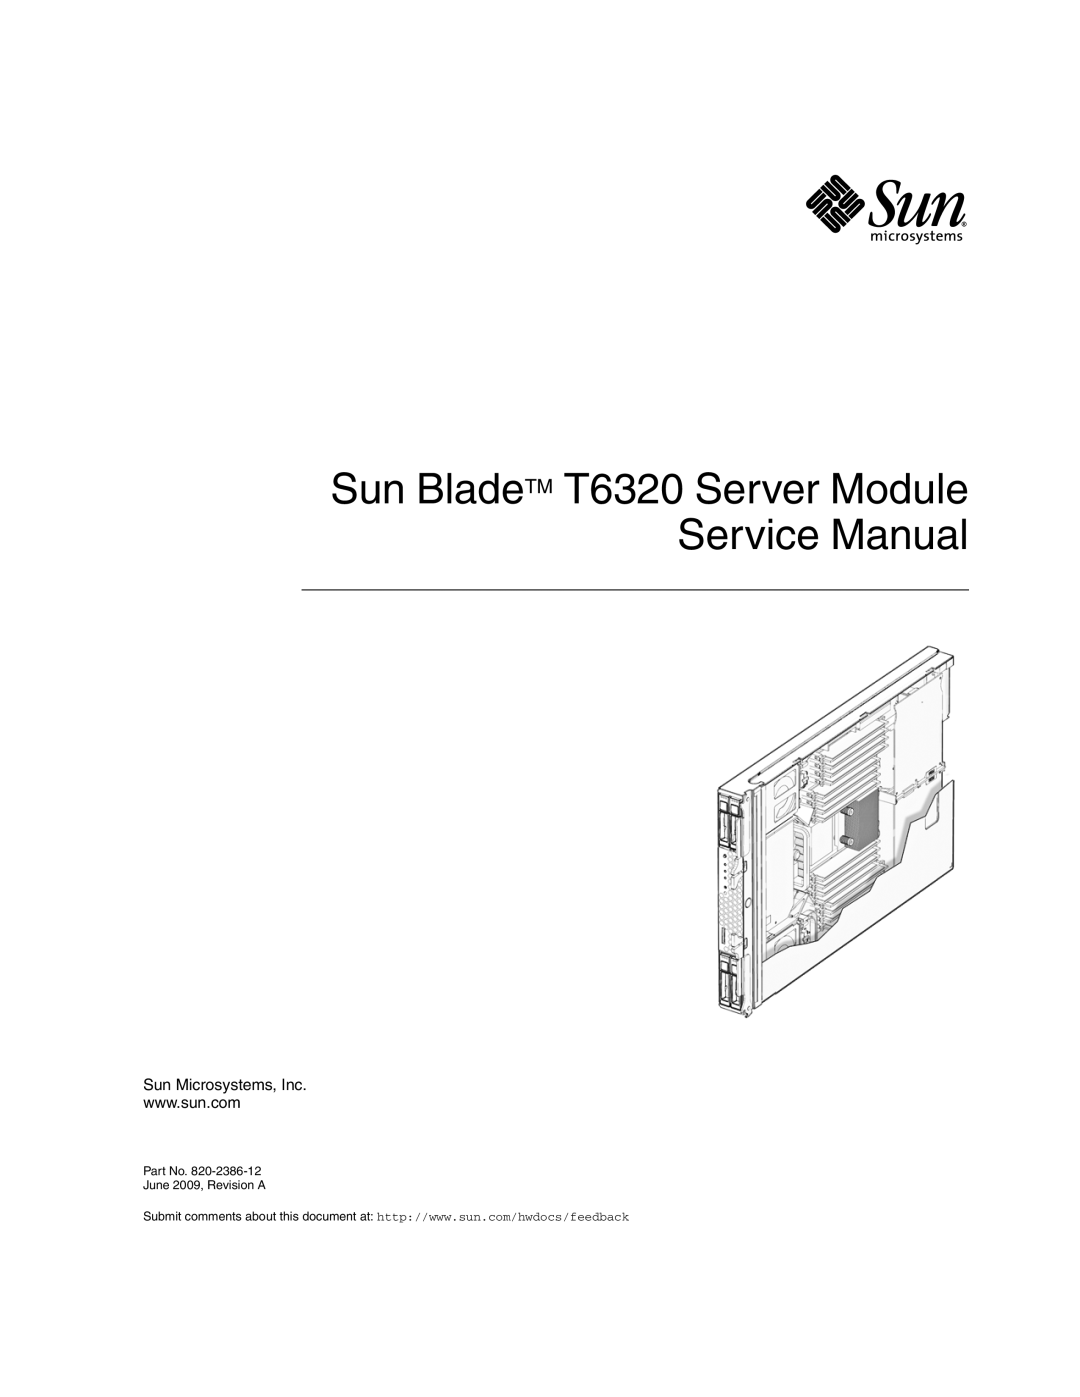 Sun Microsystems manual Sun Blade T6320 XAUI Pass Through Fabric Expansion Module, User’s Guide, Sun Microsystems, Inc 